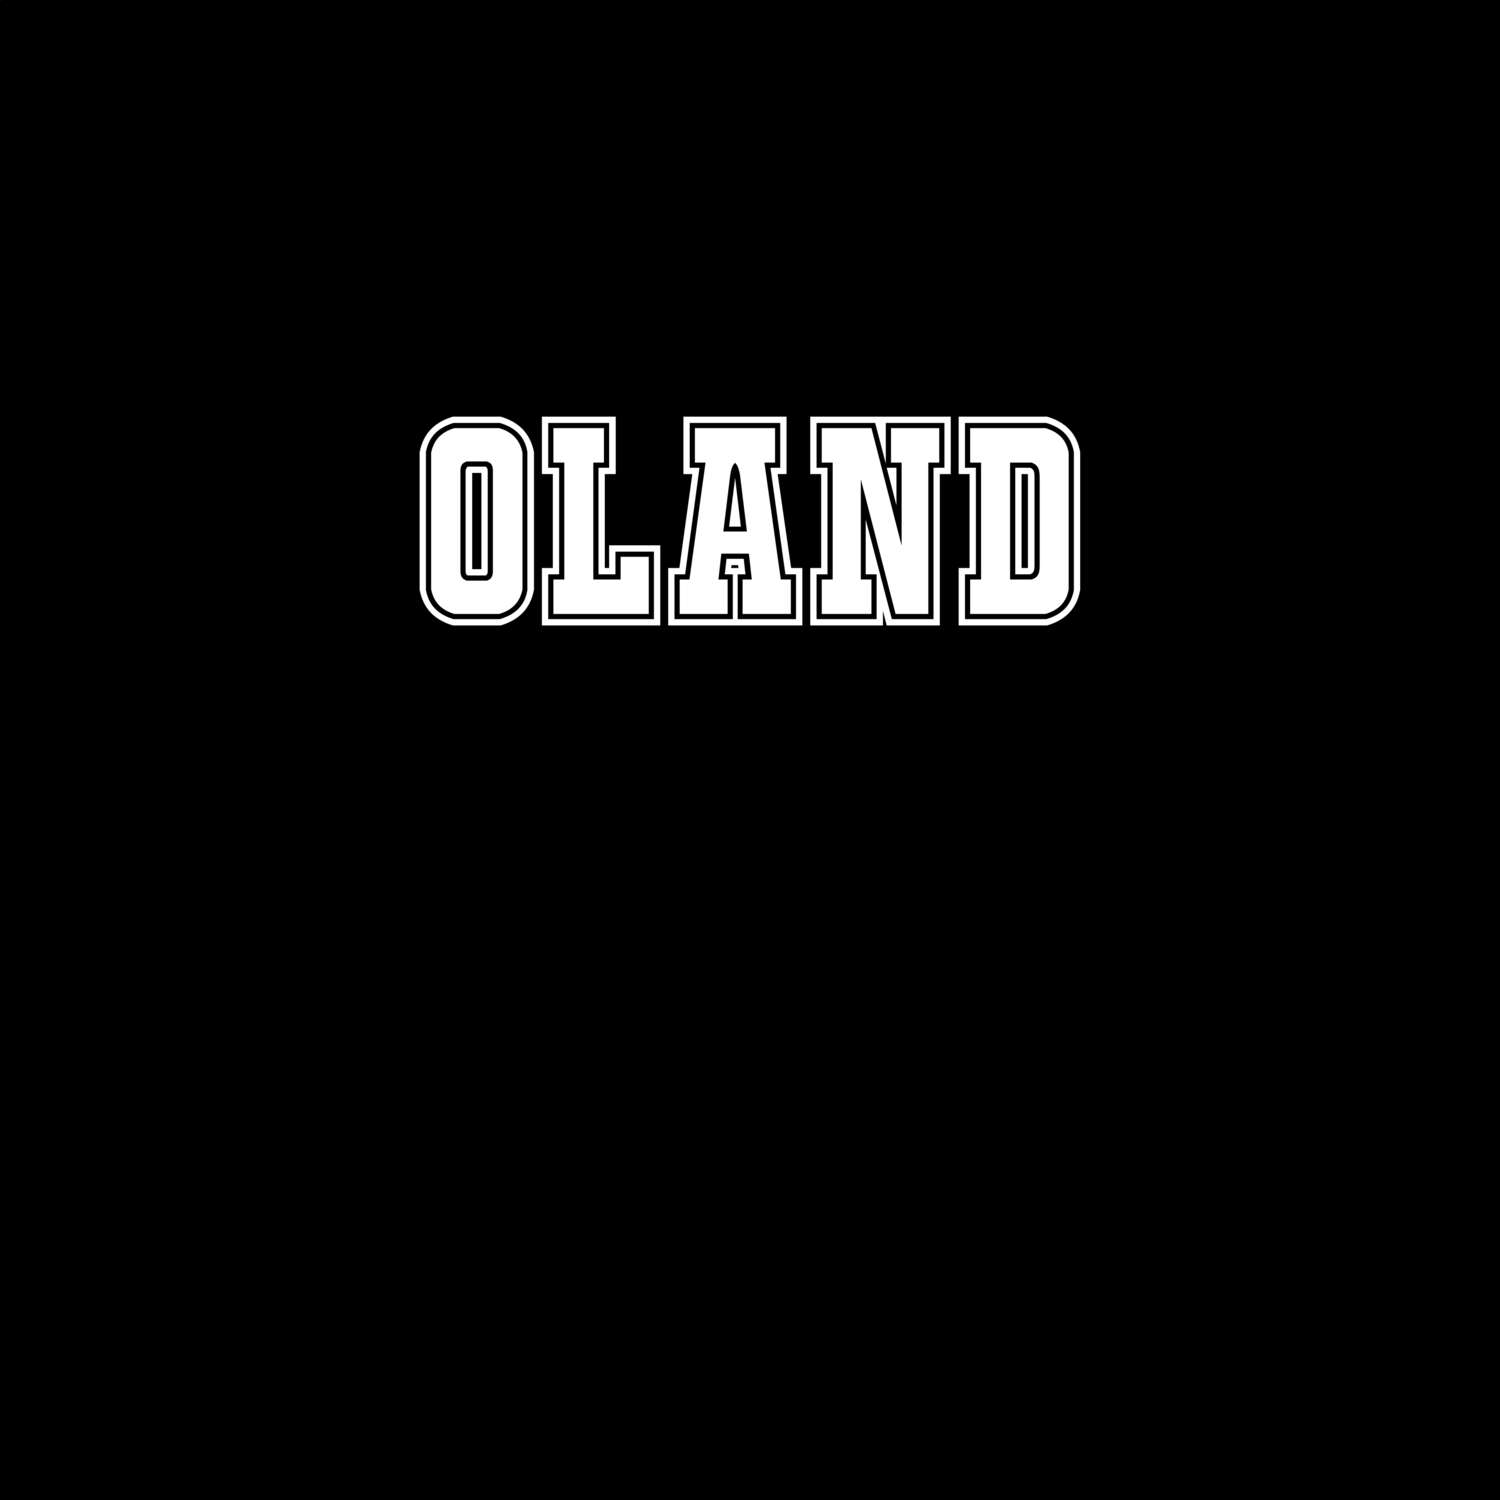 Oland T-Shirt »Classic«